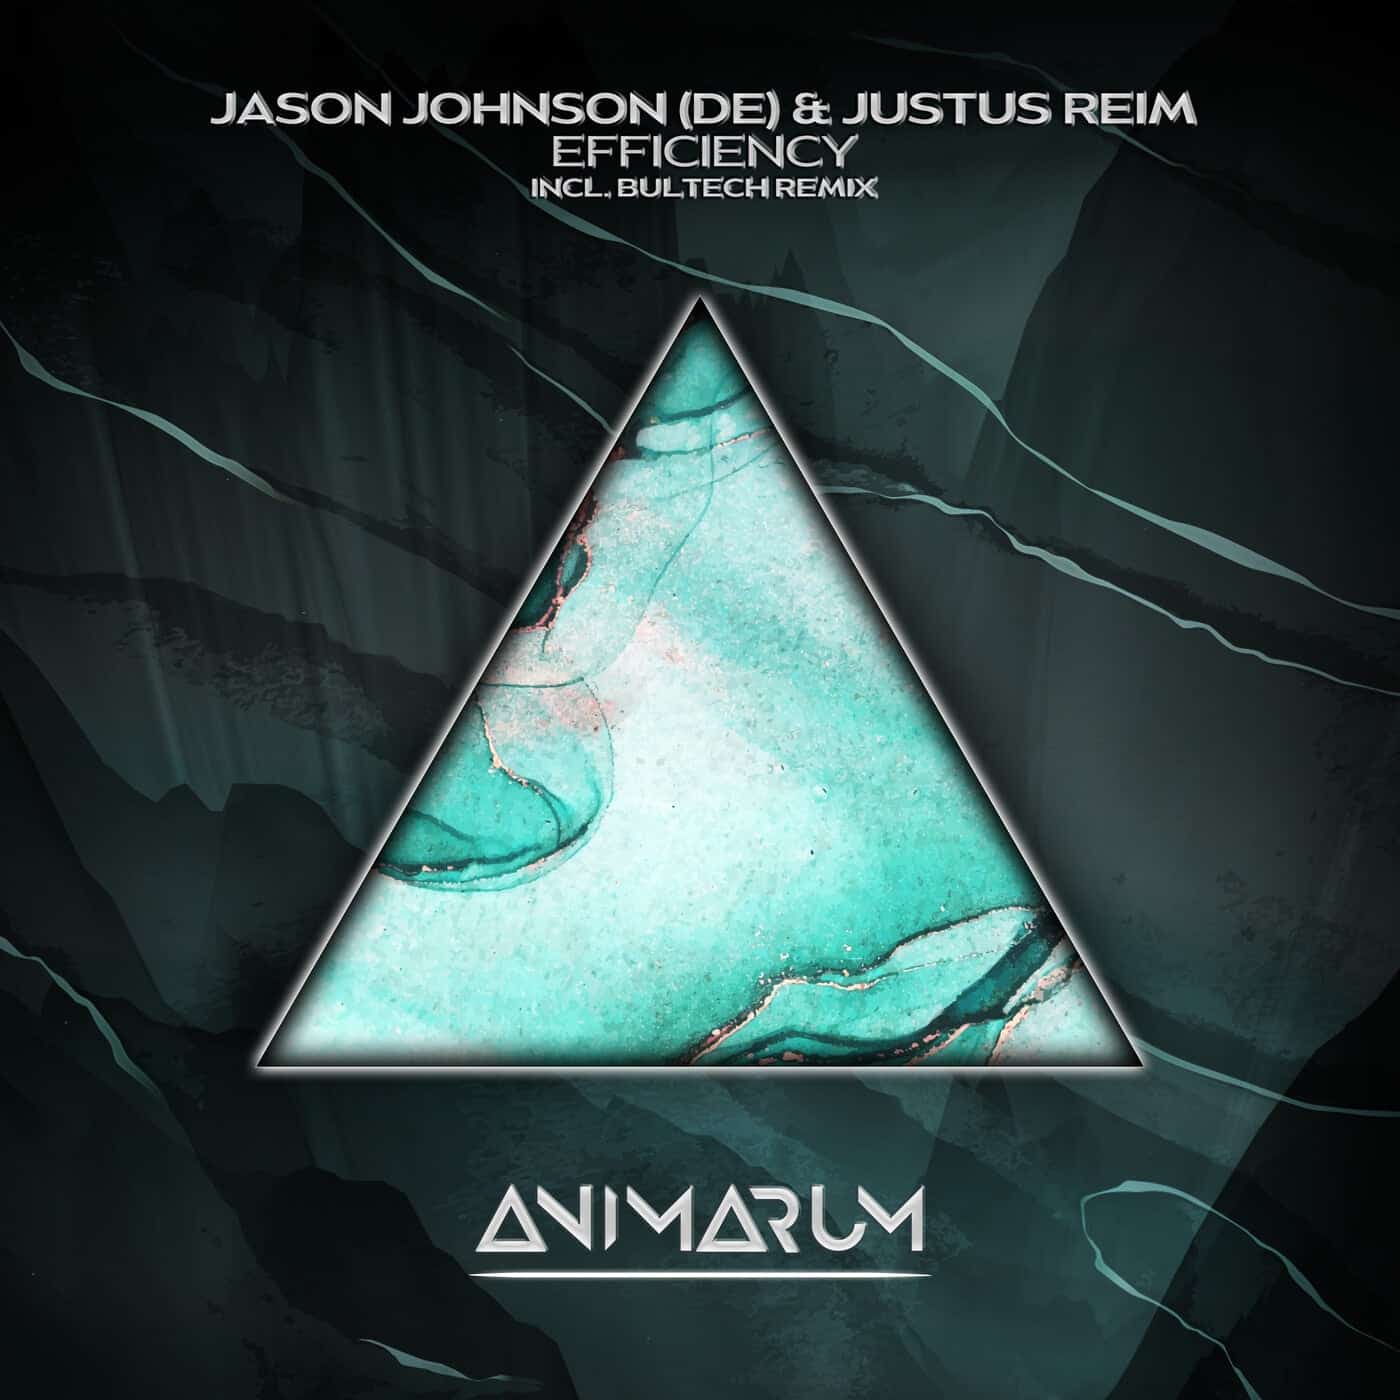 image cover: Jason Johnson (DE), Justus Reim - Efficency / AMR40